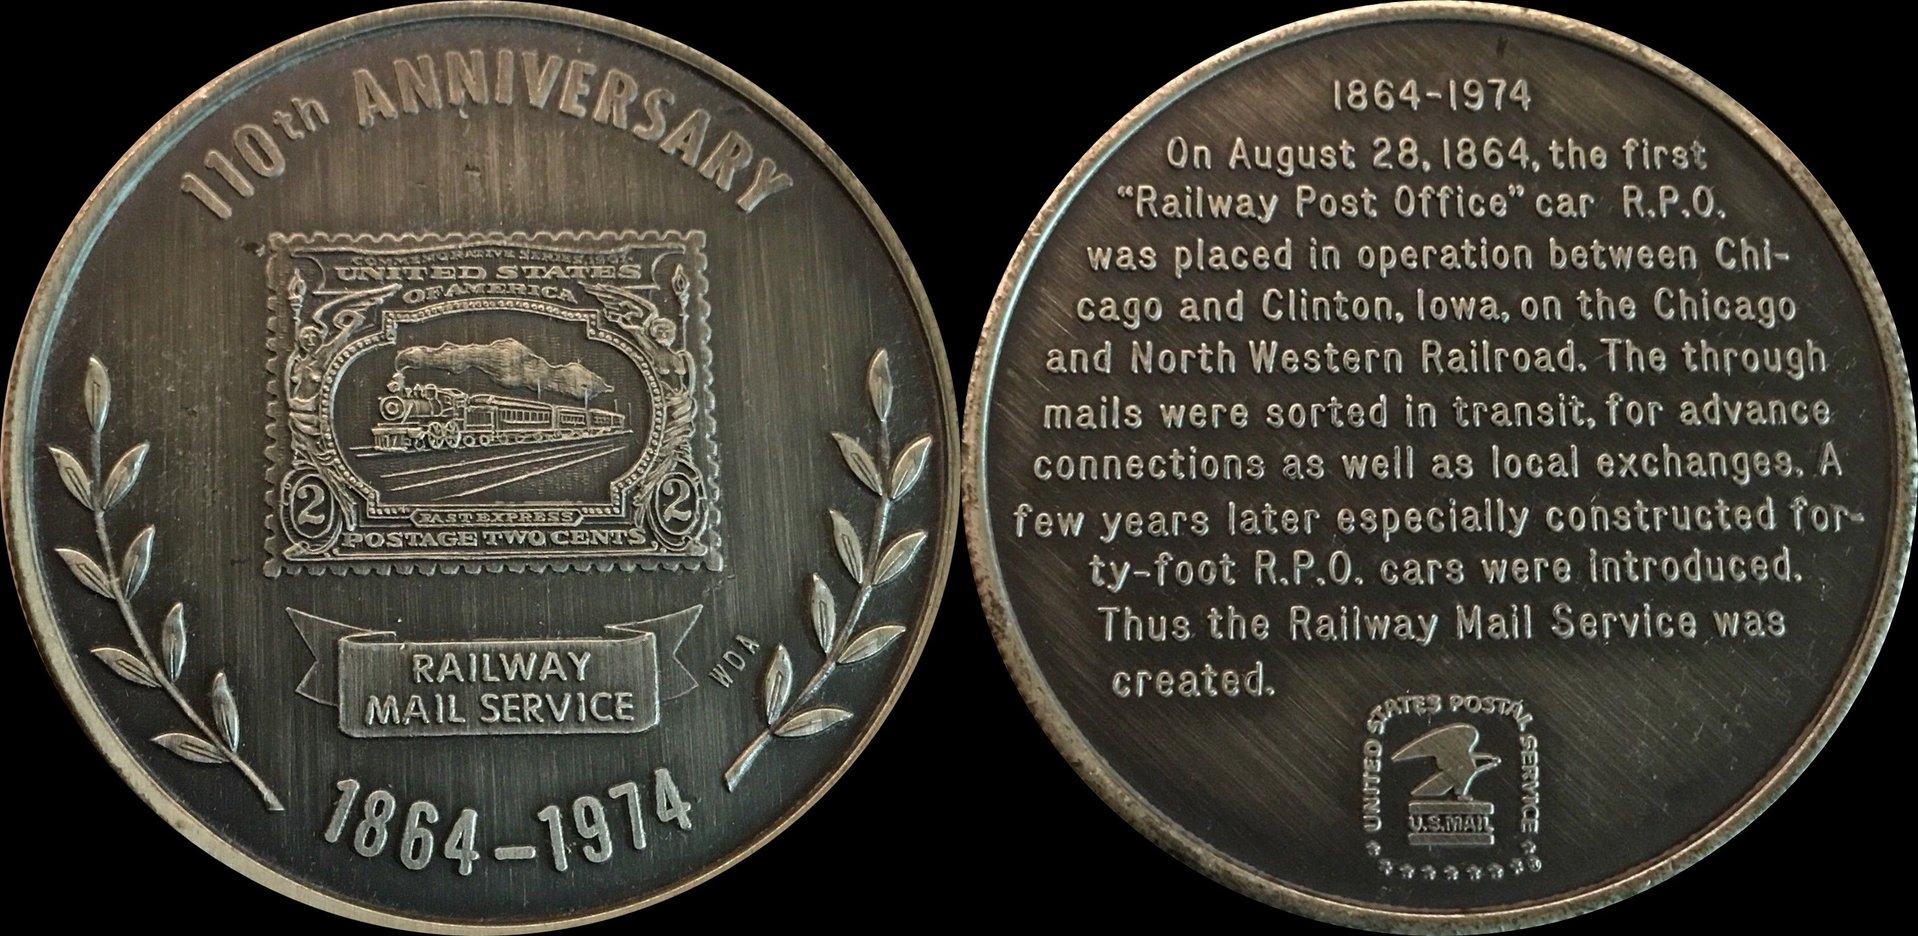 USPS Railway Mail Service Medal 1-horz.jpg